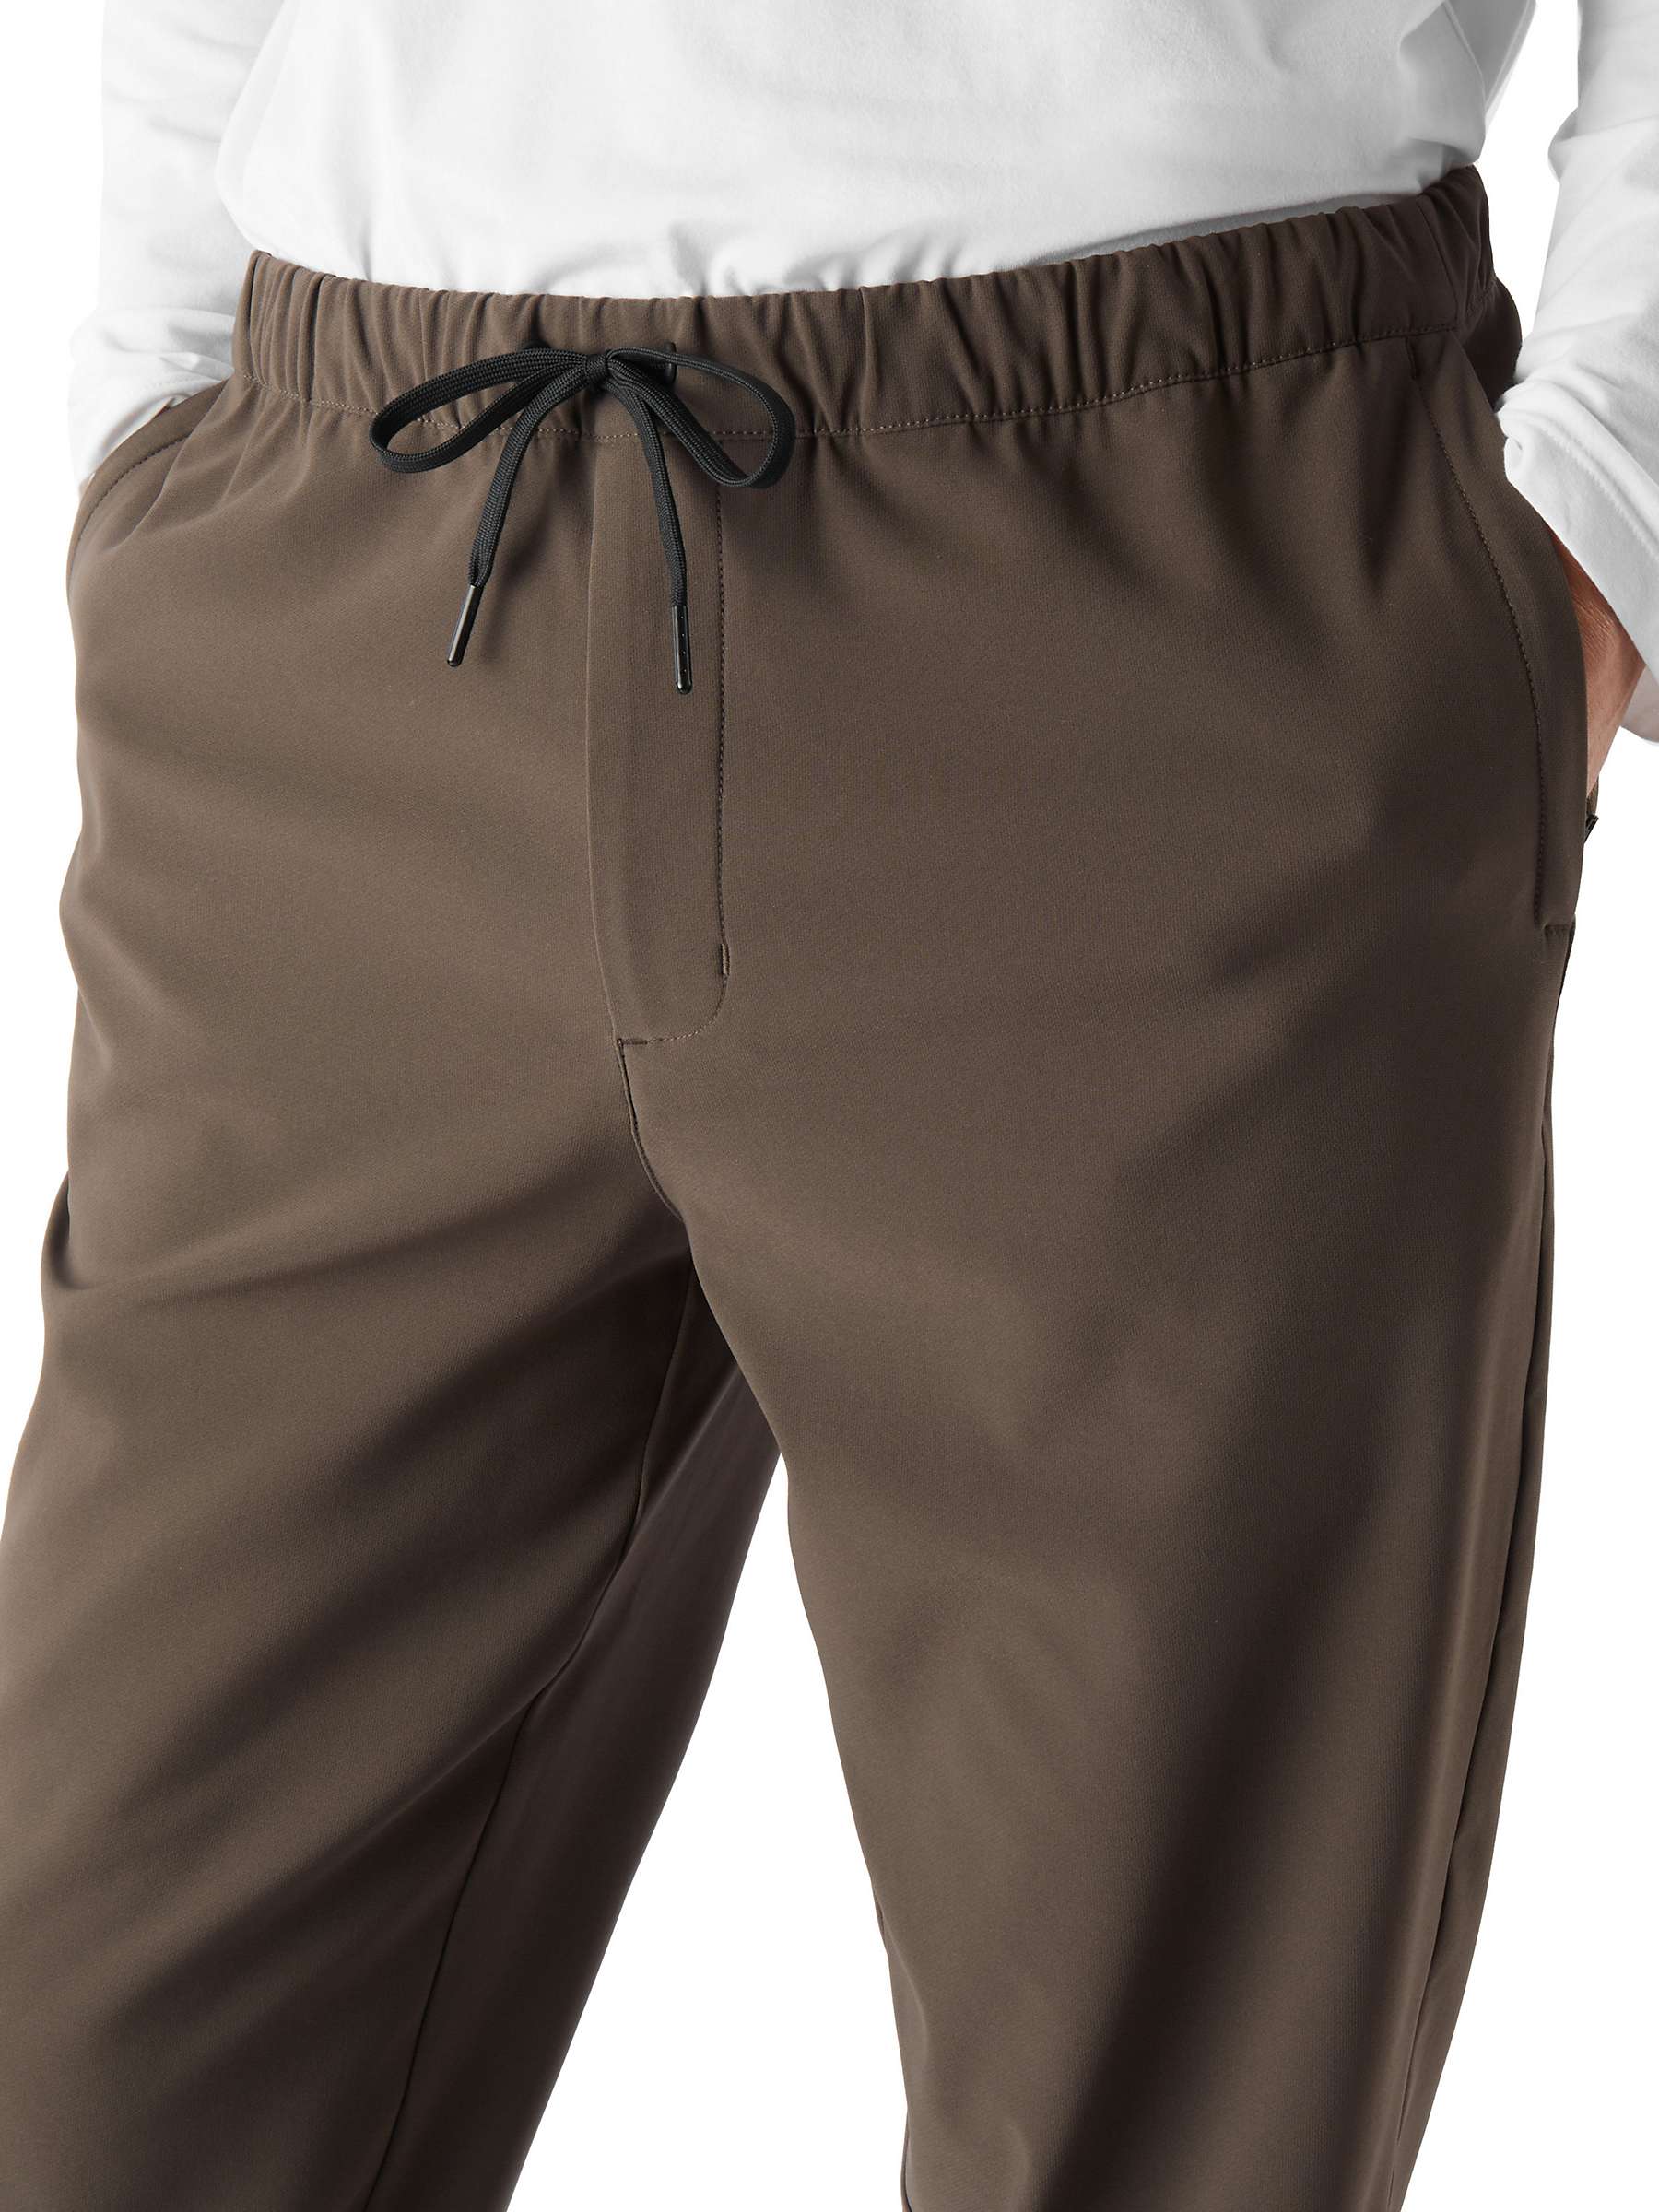 Buy Rohan Troggings Walking Trousers Online at johnlewis.com